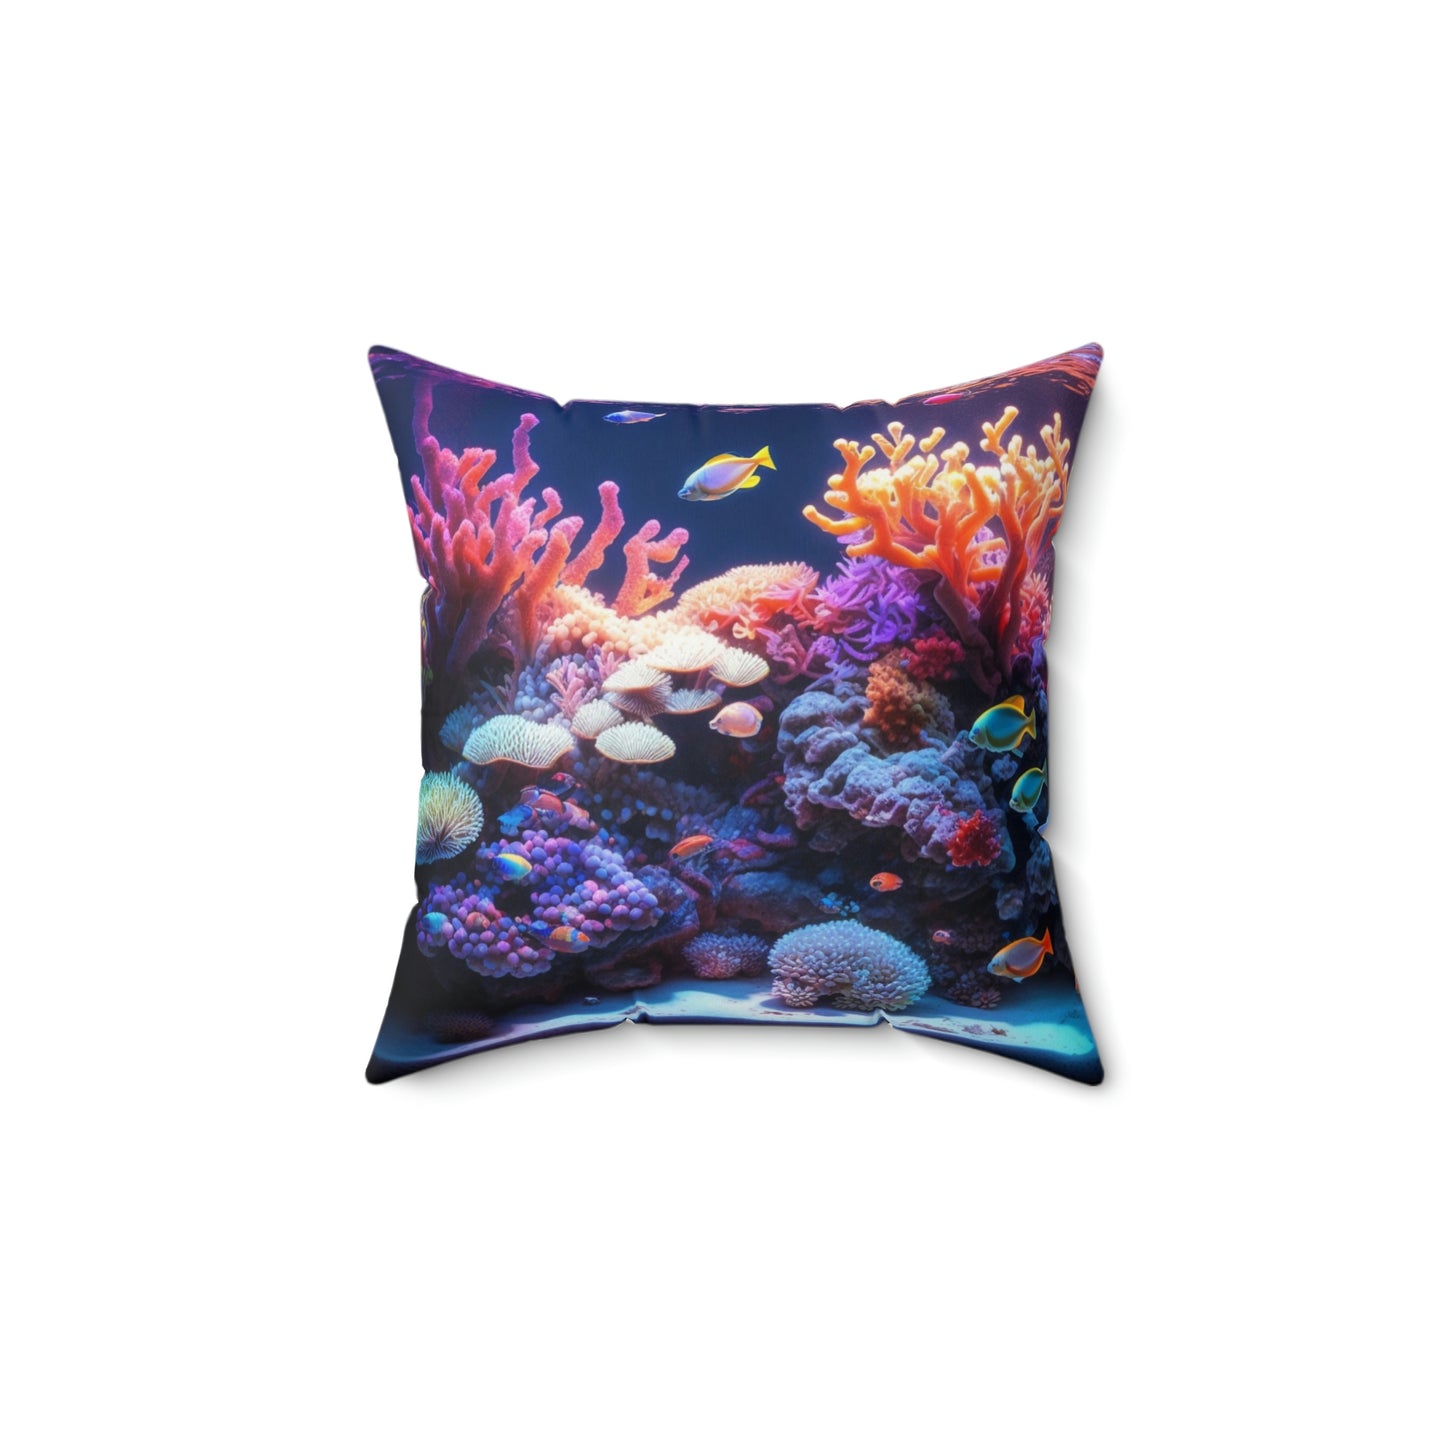 Reef Imagination Pillow - Reef of Clowns